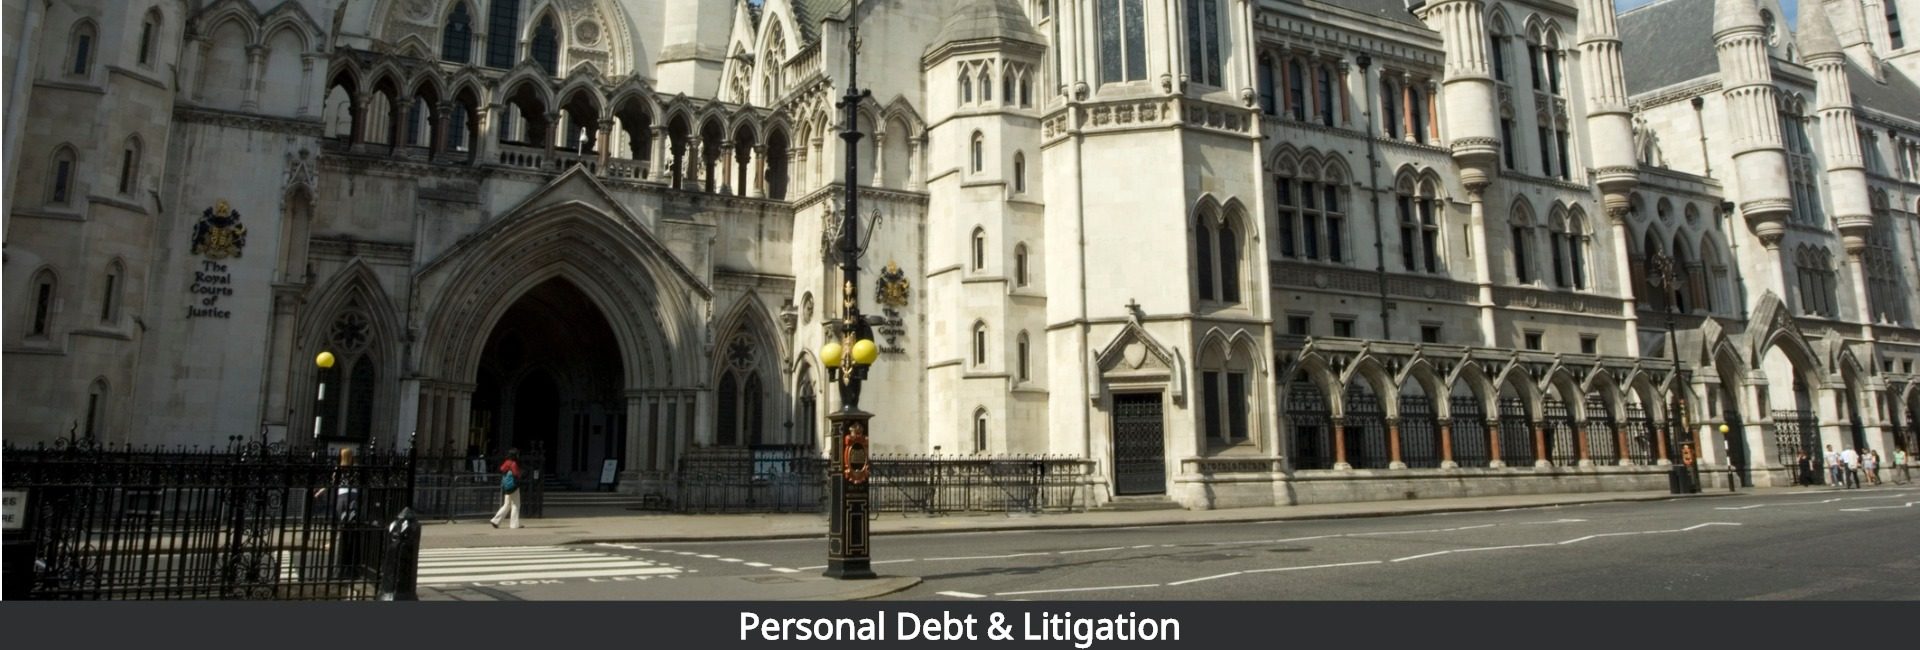 Personal Debt & Litigation London Process Servers